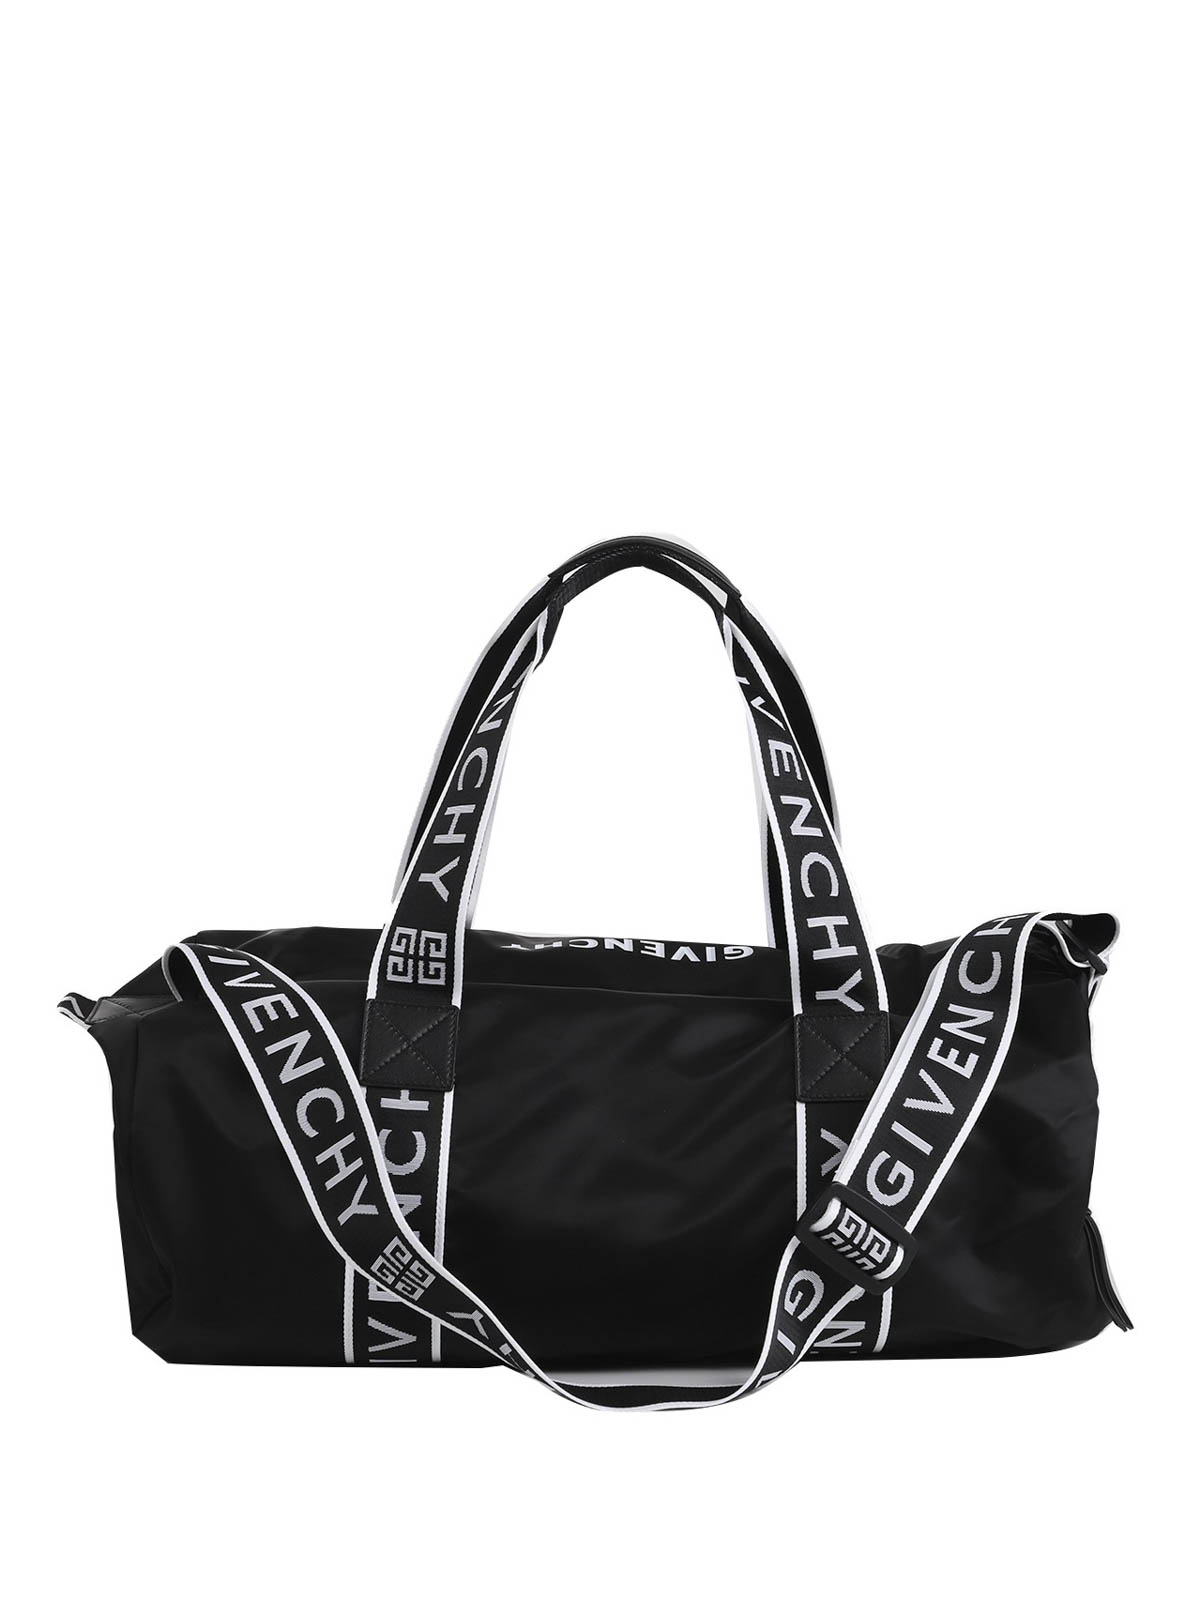 Givenchy Luggage Bag Online | www.jacobtoricaterers.co.uk